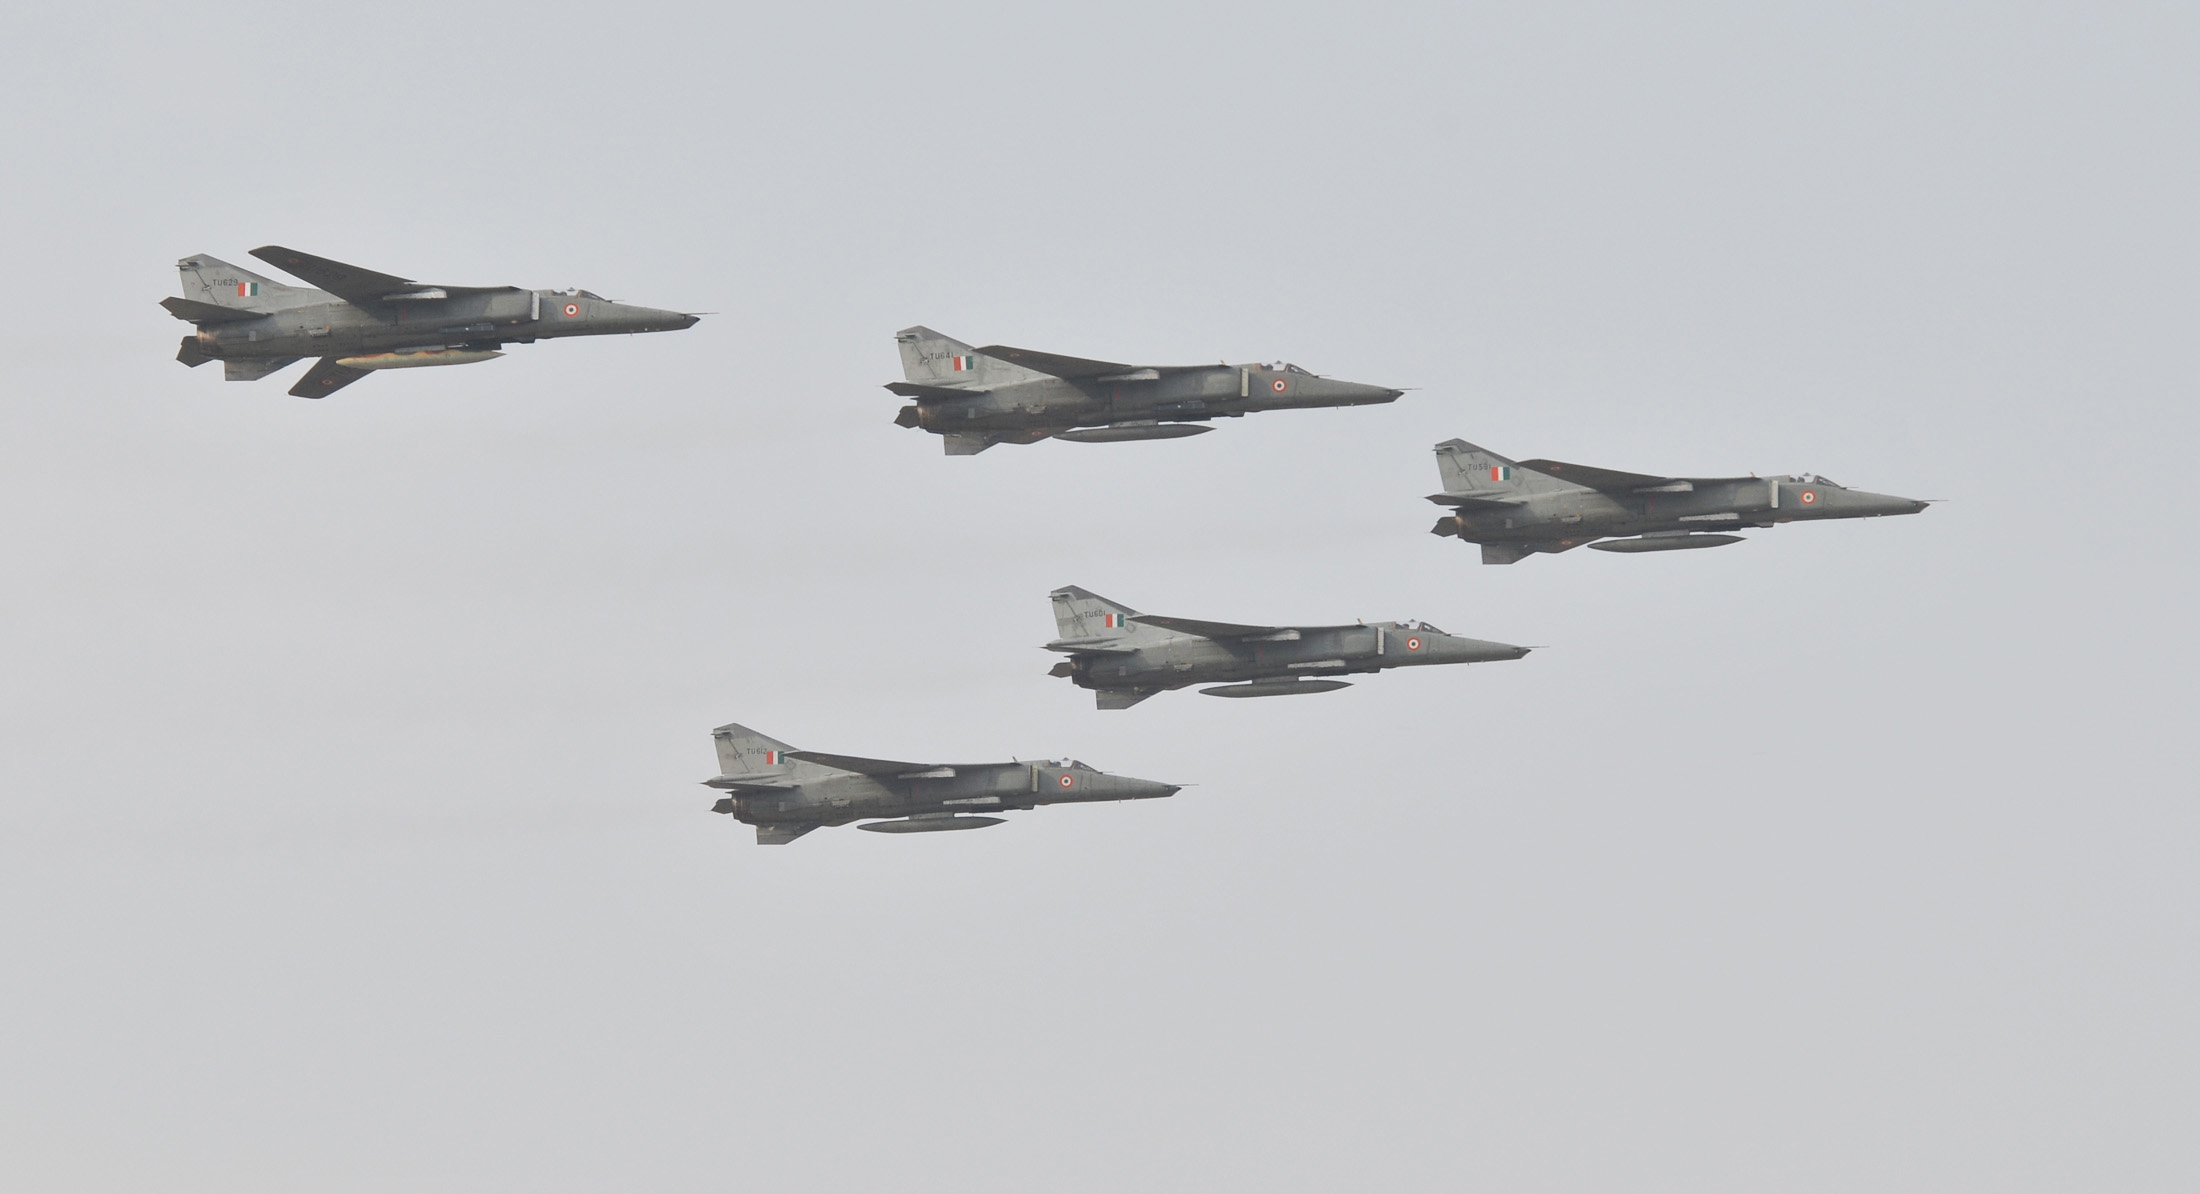 Iron-Fist-2013-MiG-27-IAF-01.jpg